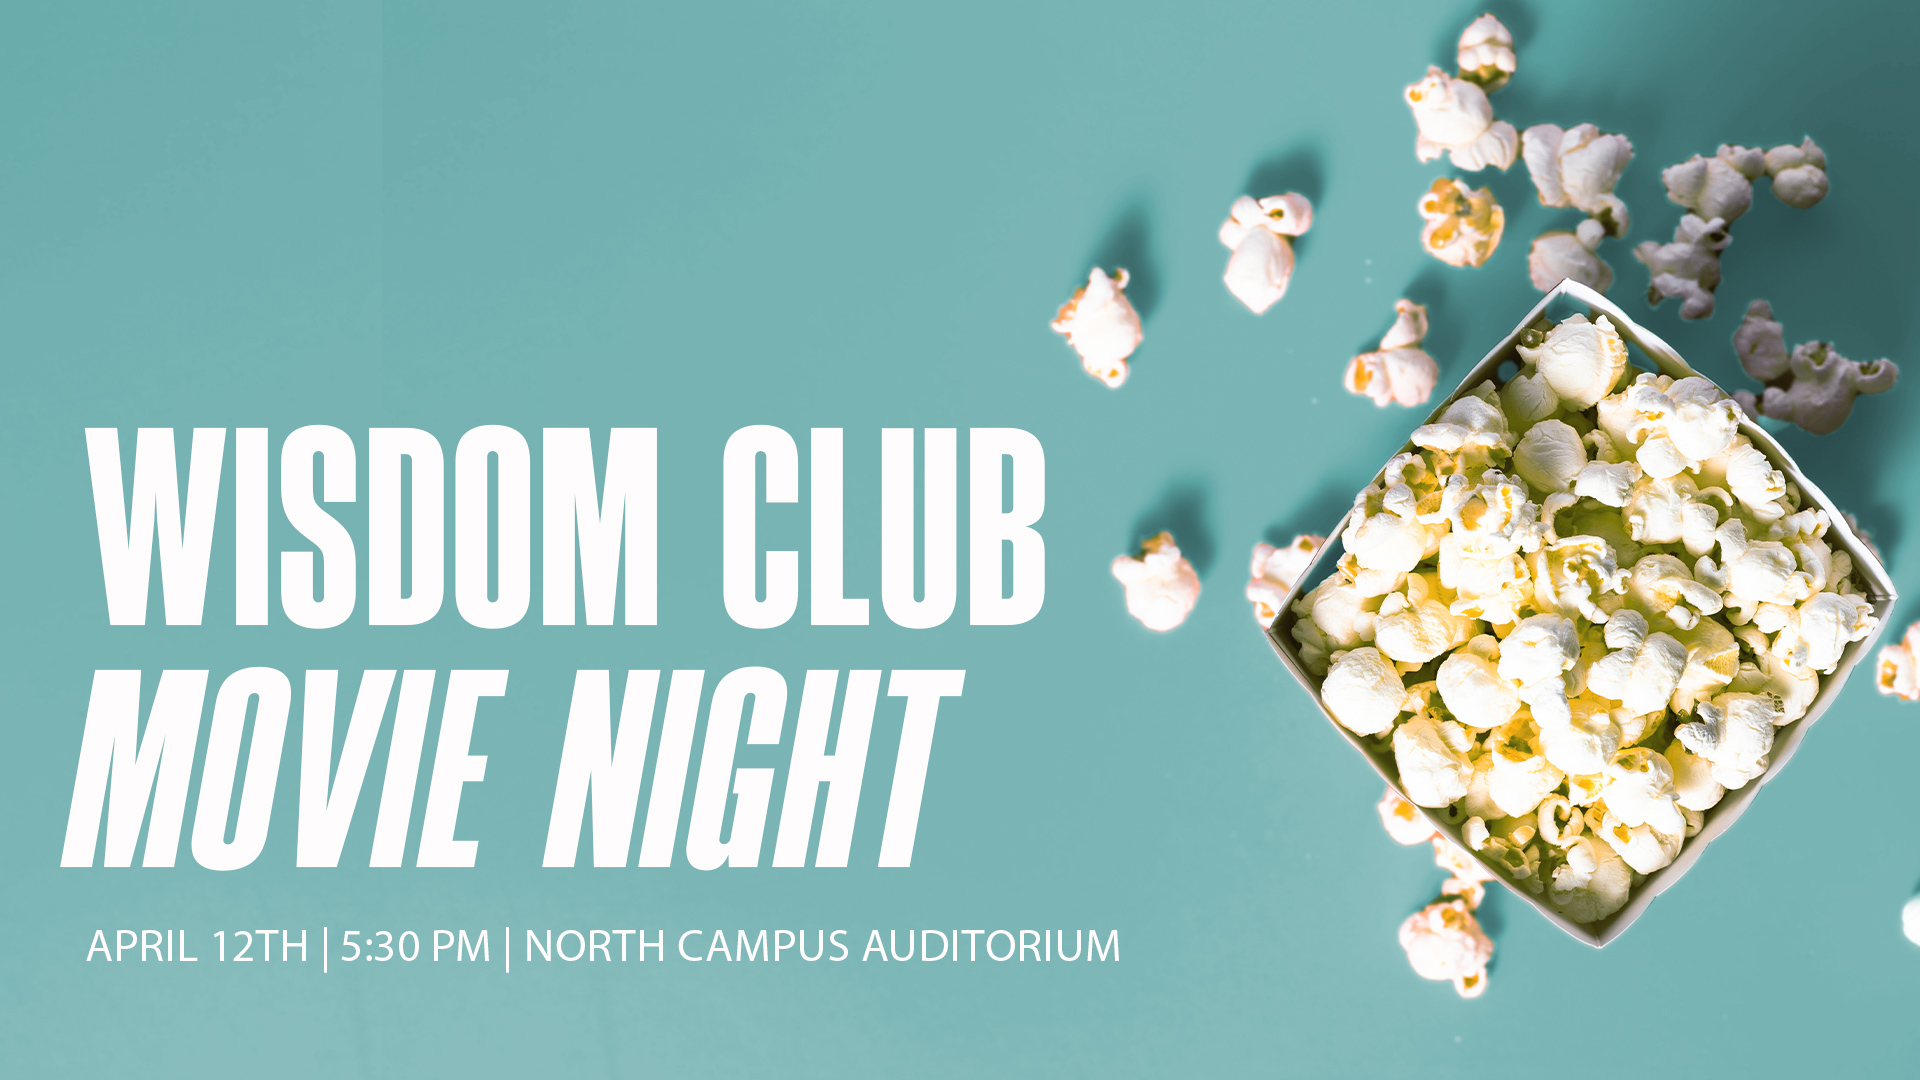 Wisdom Club Movie Night at the Gainesville campus